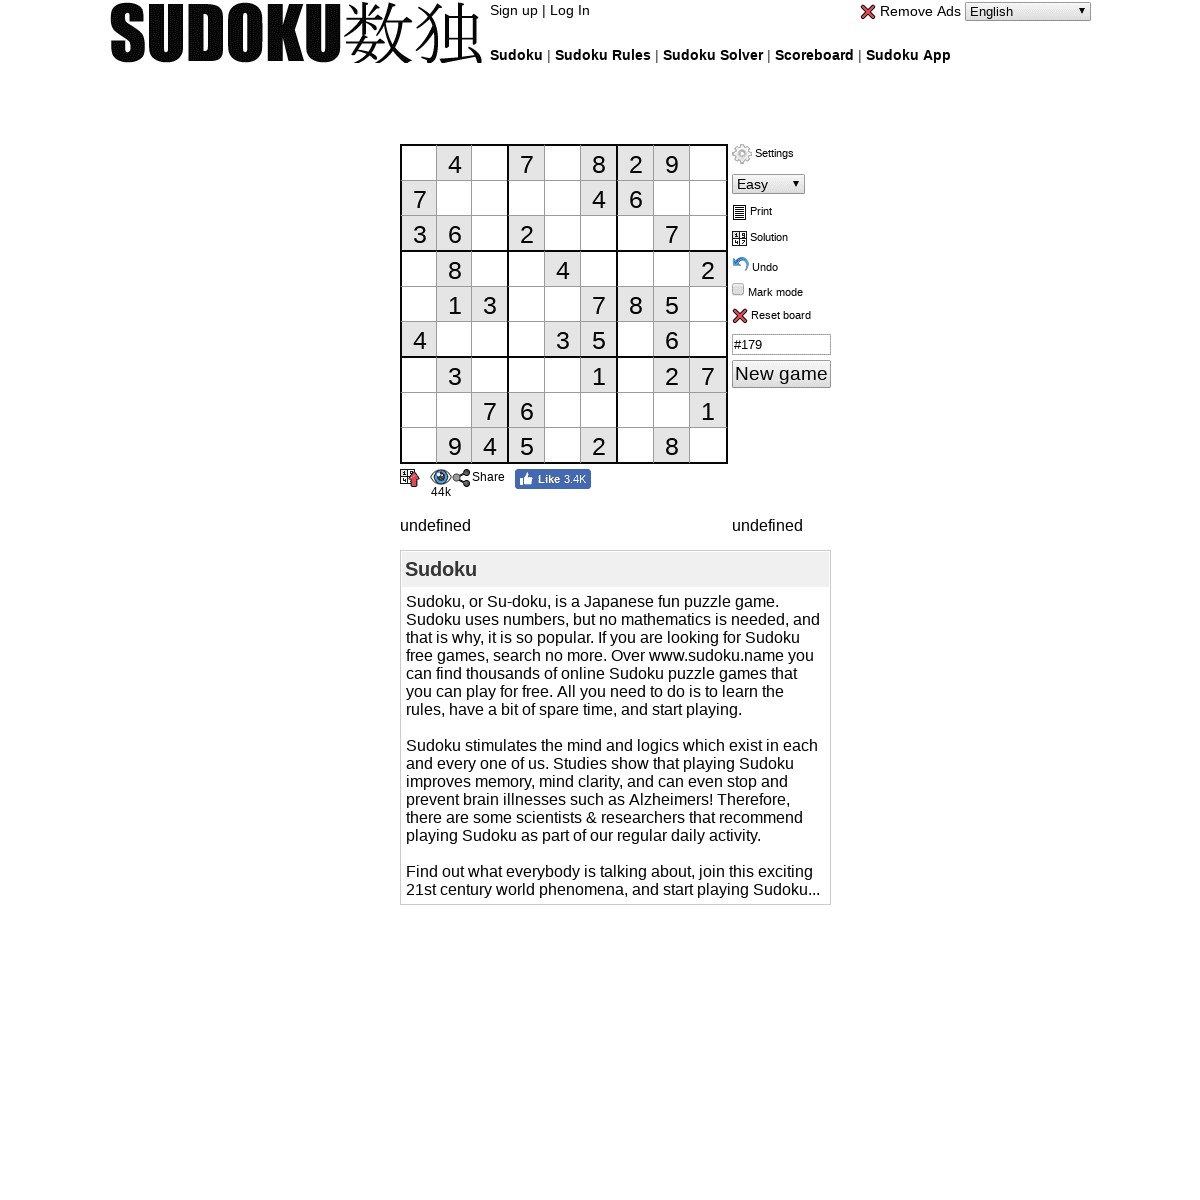 Sudoku Free Games - Play, Print & Share Free Sudoku Online puzzles